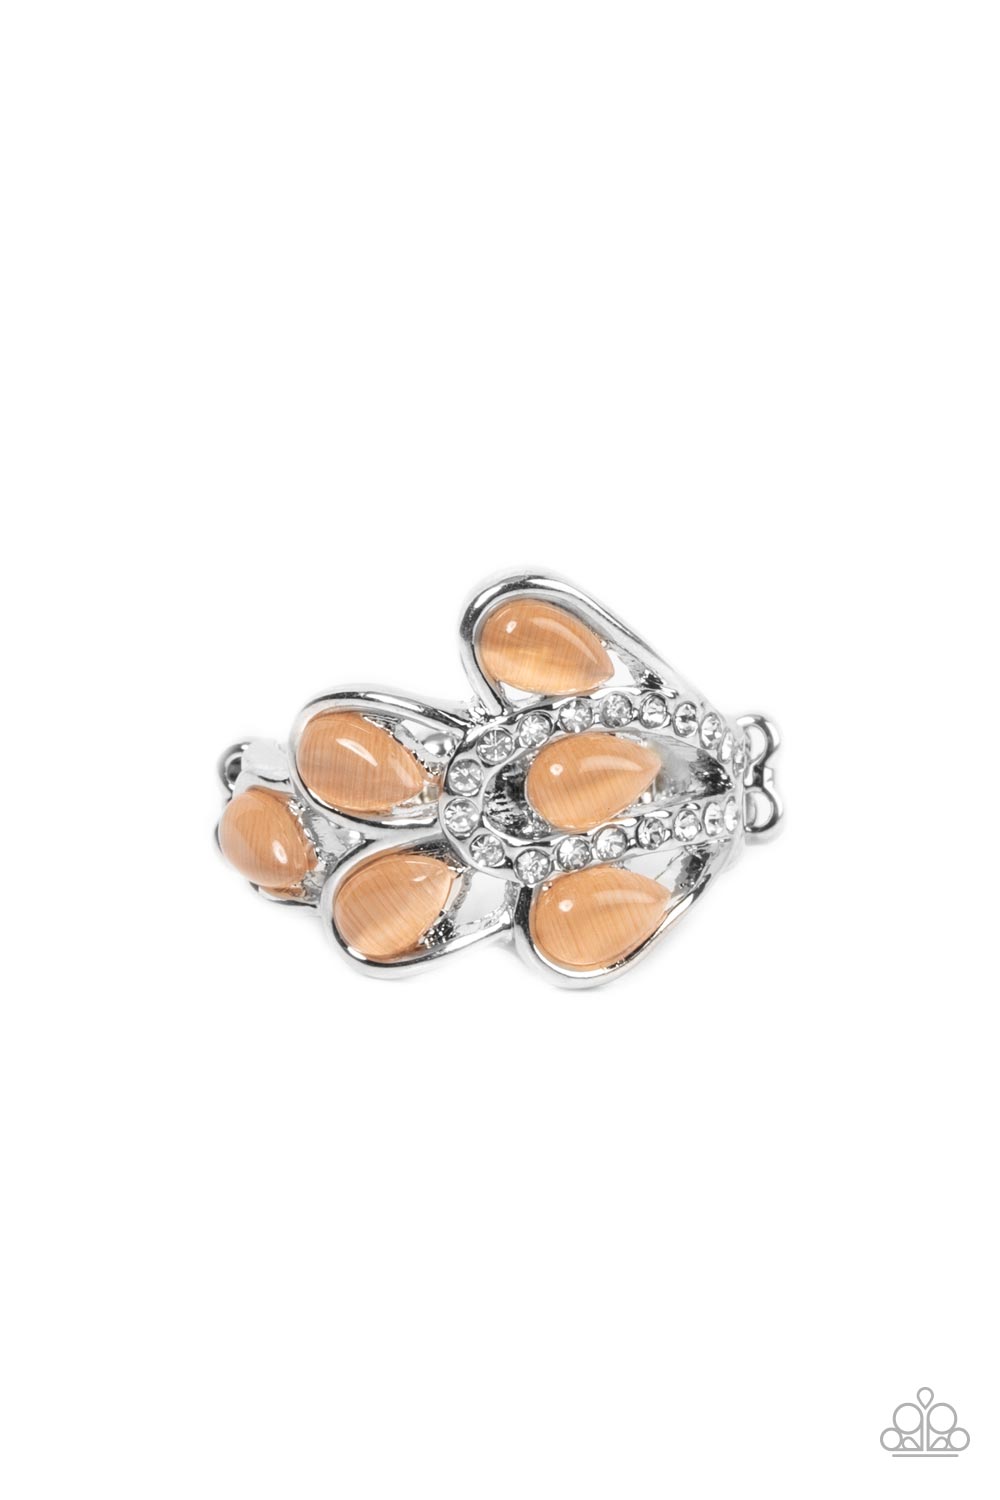 Cats Eye Cadence Orange Moonstone Ring - Paparazzi Accessories- lightbox - CarasShop.com - $5 Jewelry by Cara Jewels